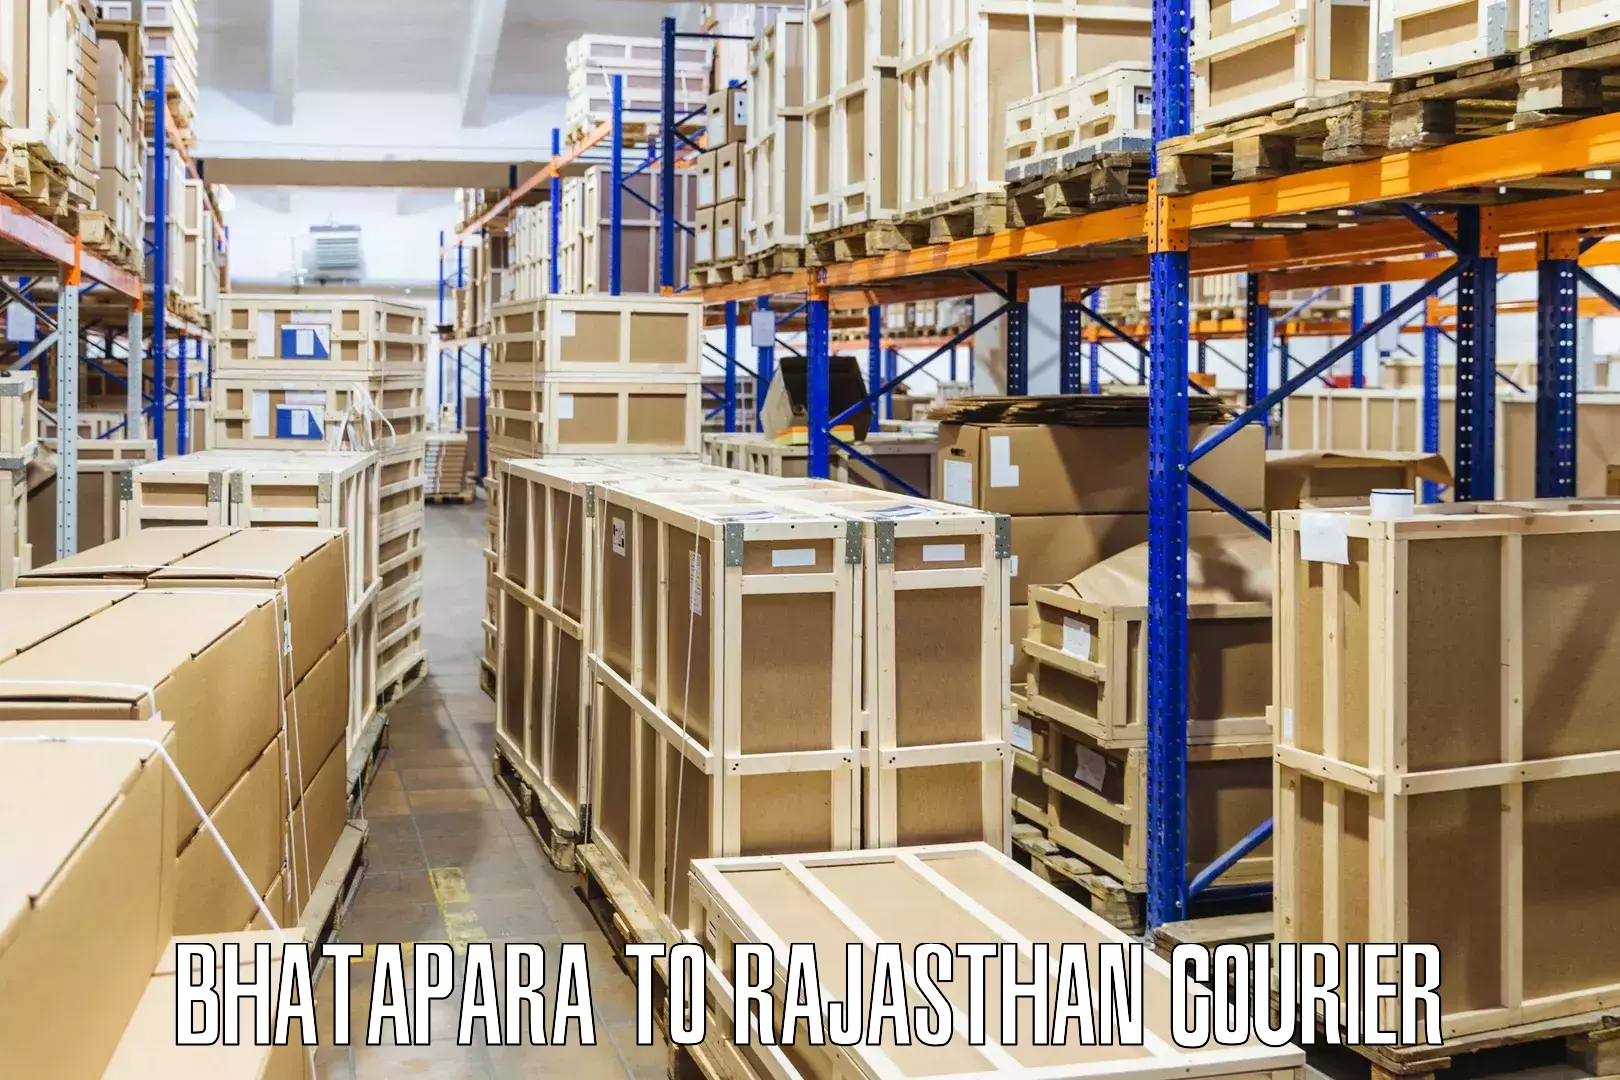 Courier app Bhatapara to Bhinder